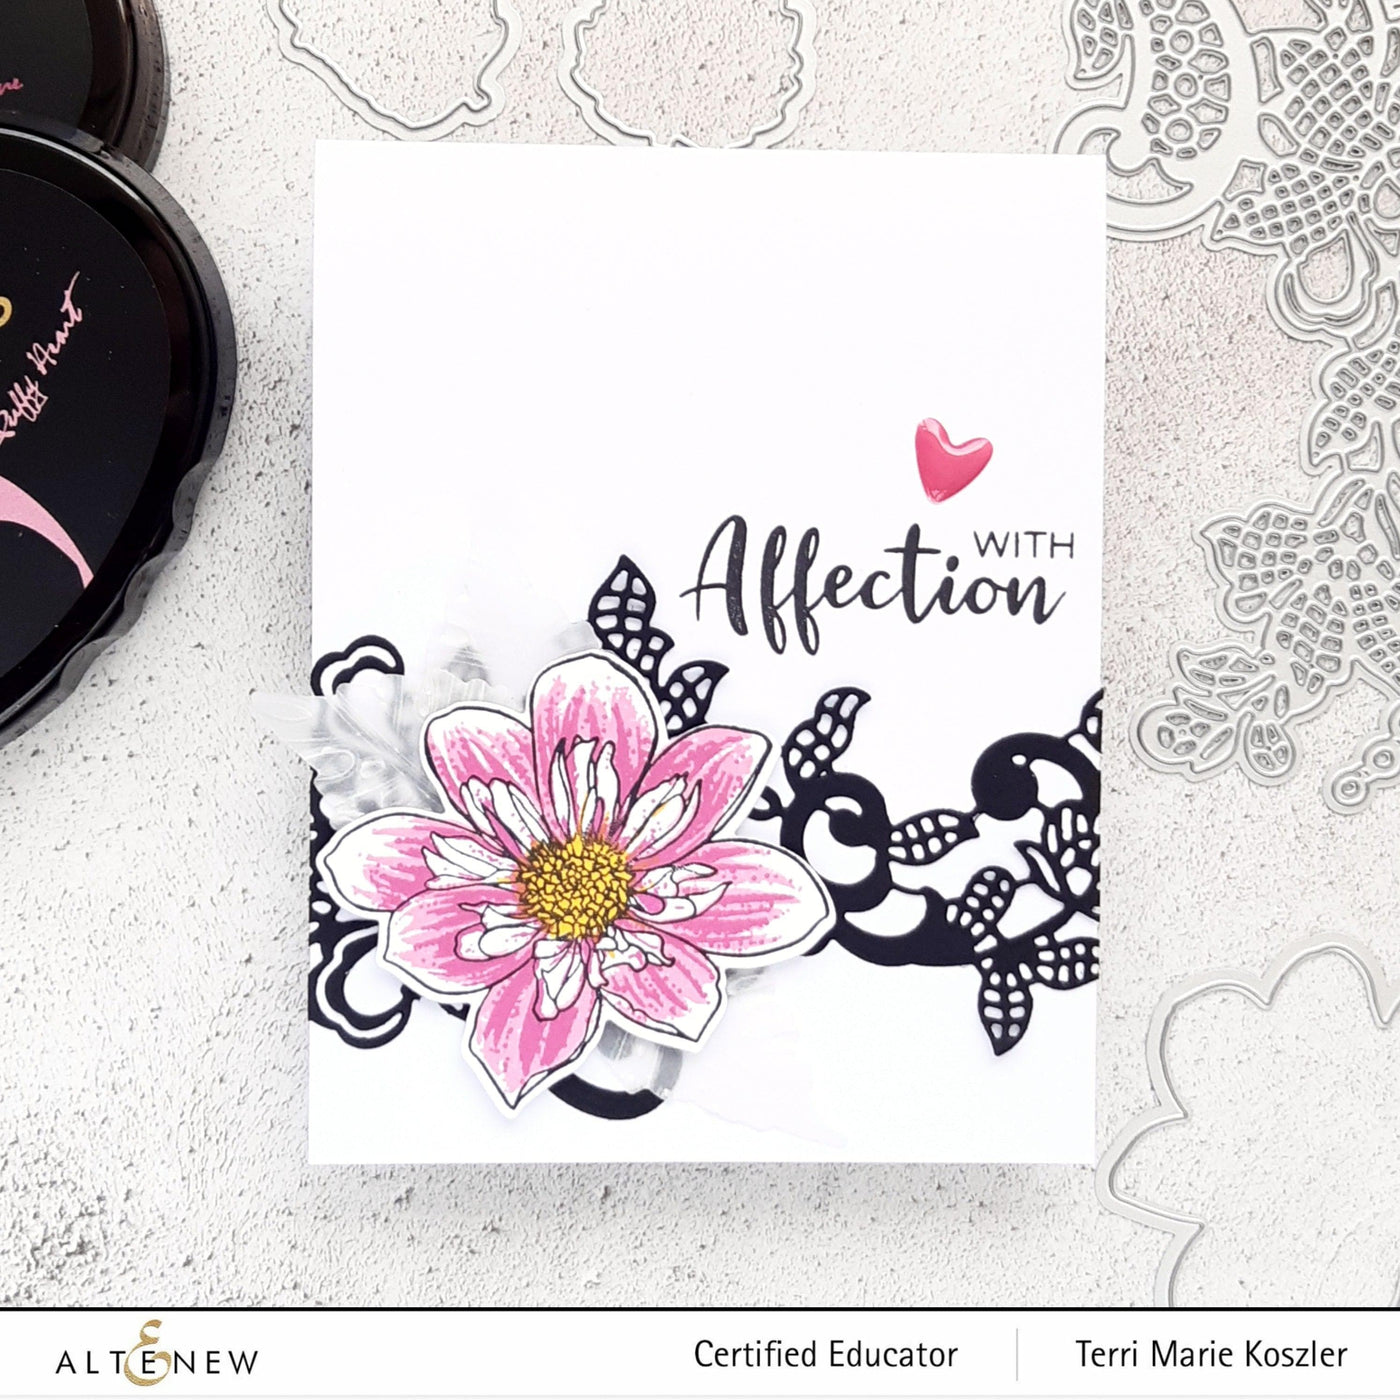 Build-A-Flower: Fashion Monger Dahlia Layering Stamp & Die Set